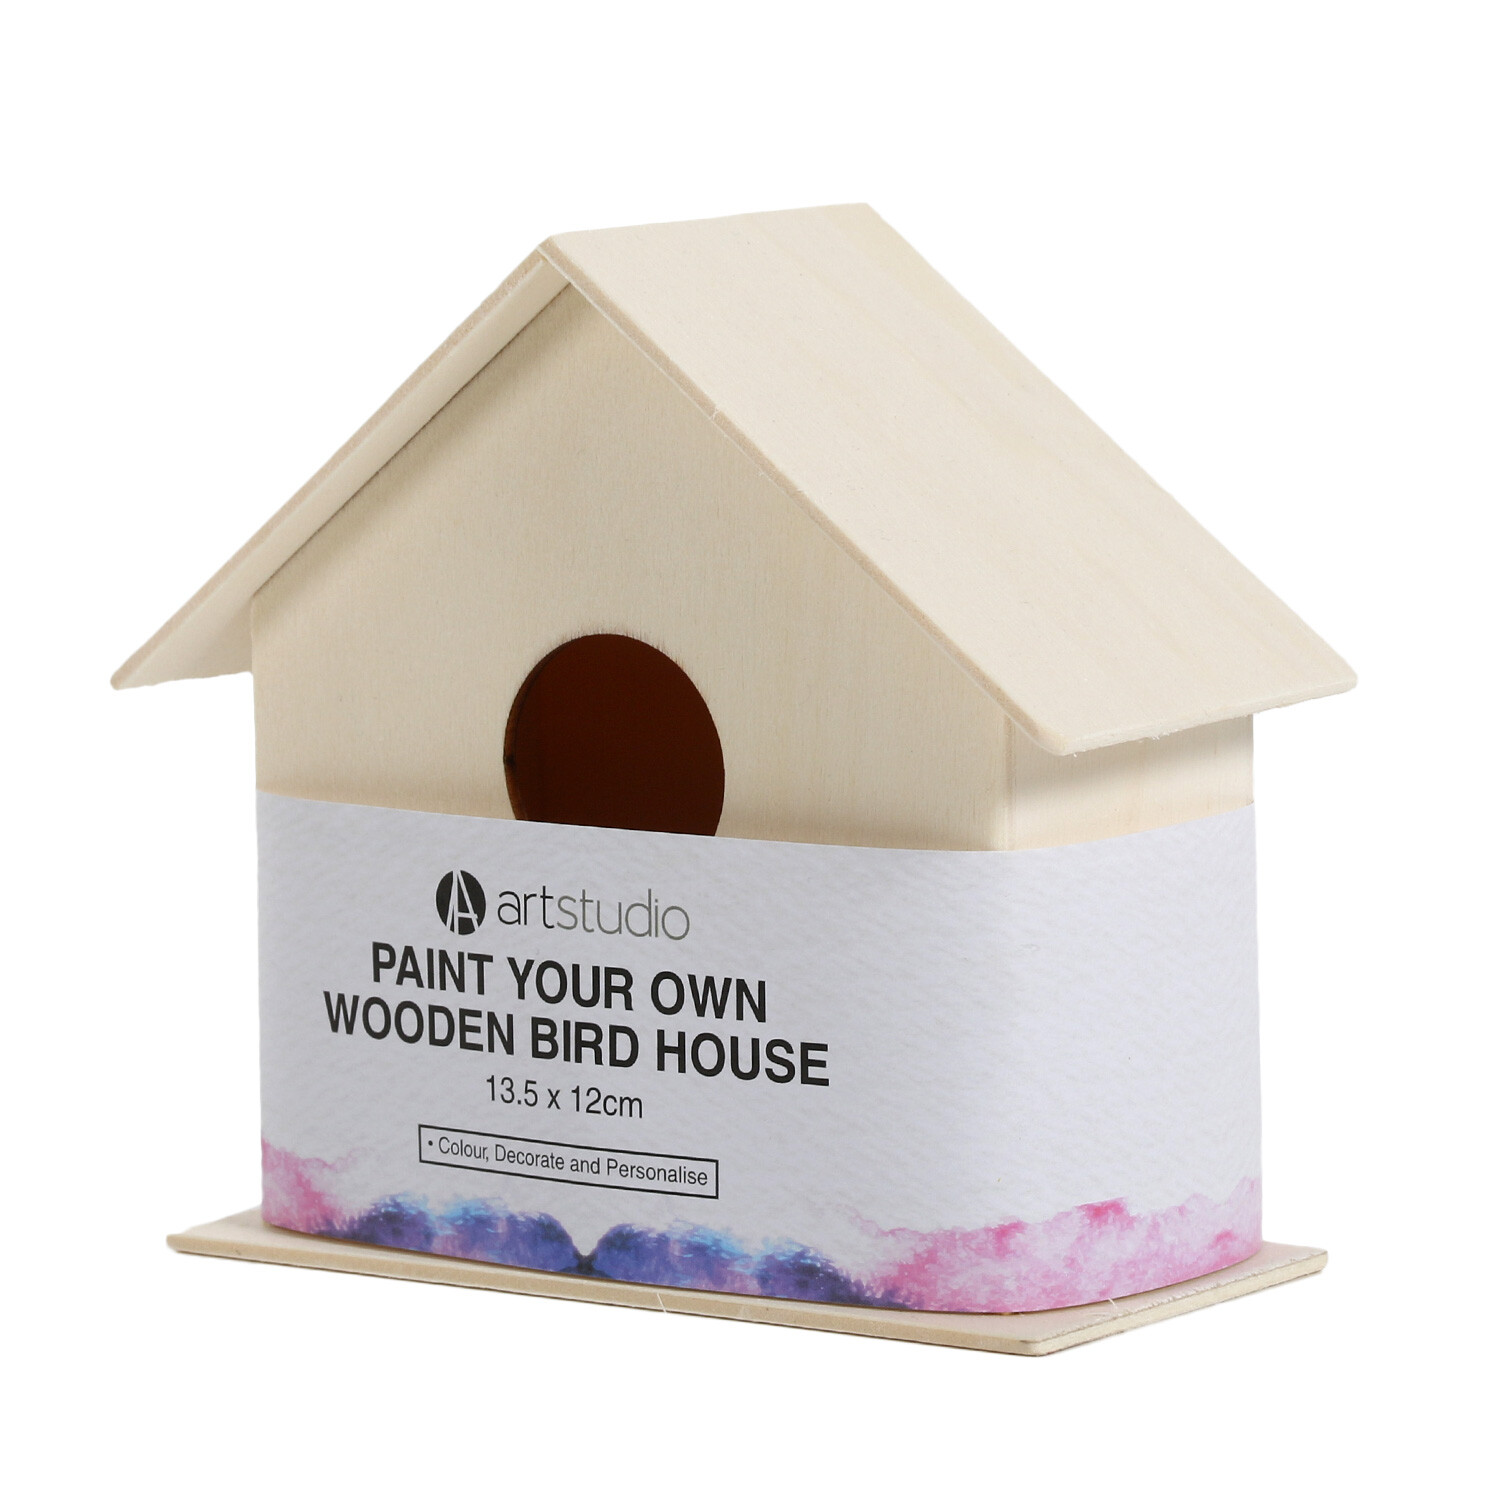 Art Studio Paint Your Own Wooden Bird House Kit Image 1